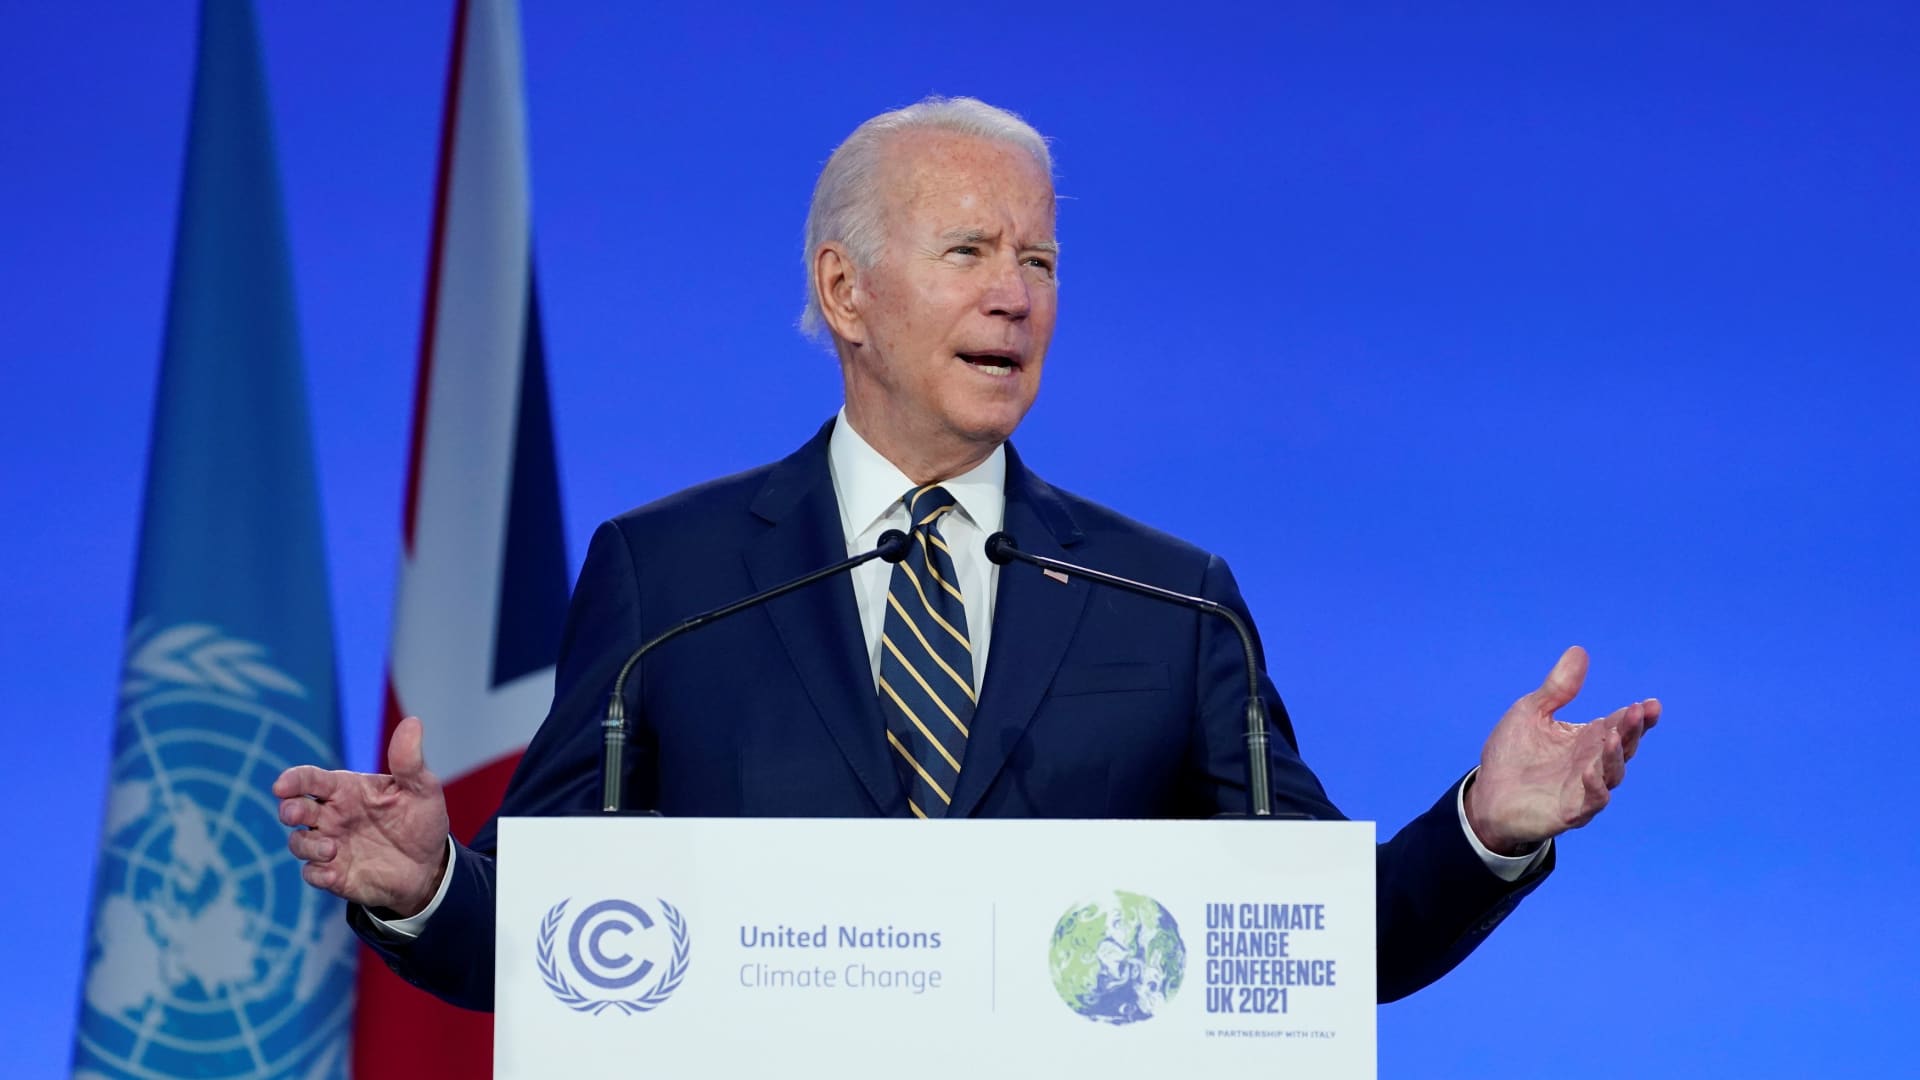 U.S. President Joe Biden speaks during the UN Climate Change Conference (COP26) in Glasgow, Scotland, Britain November 1, 2021.